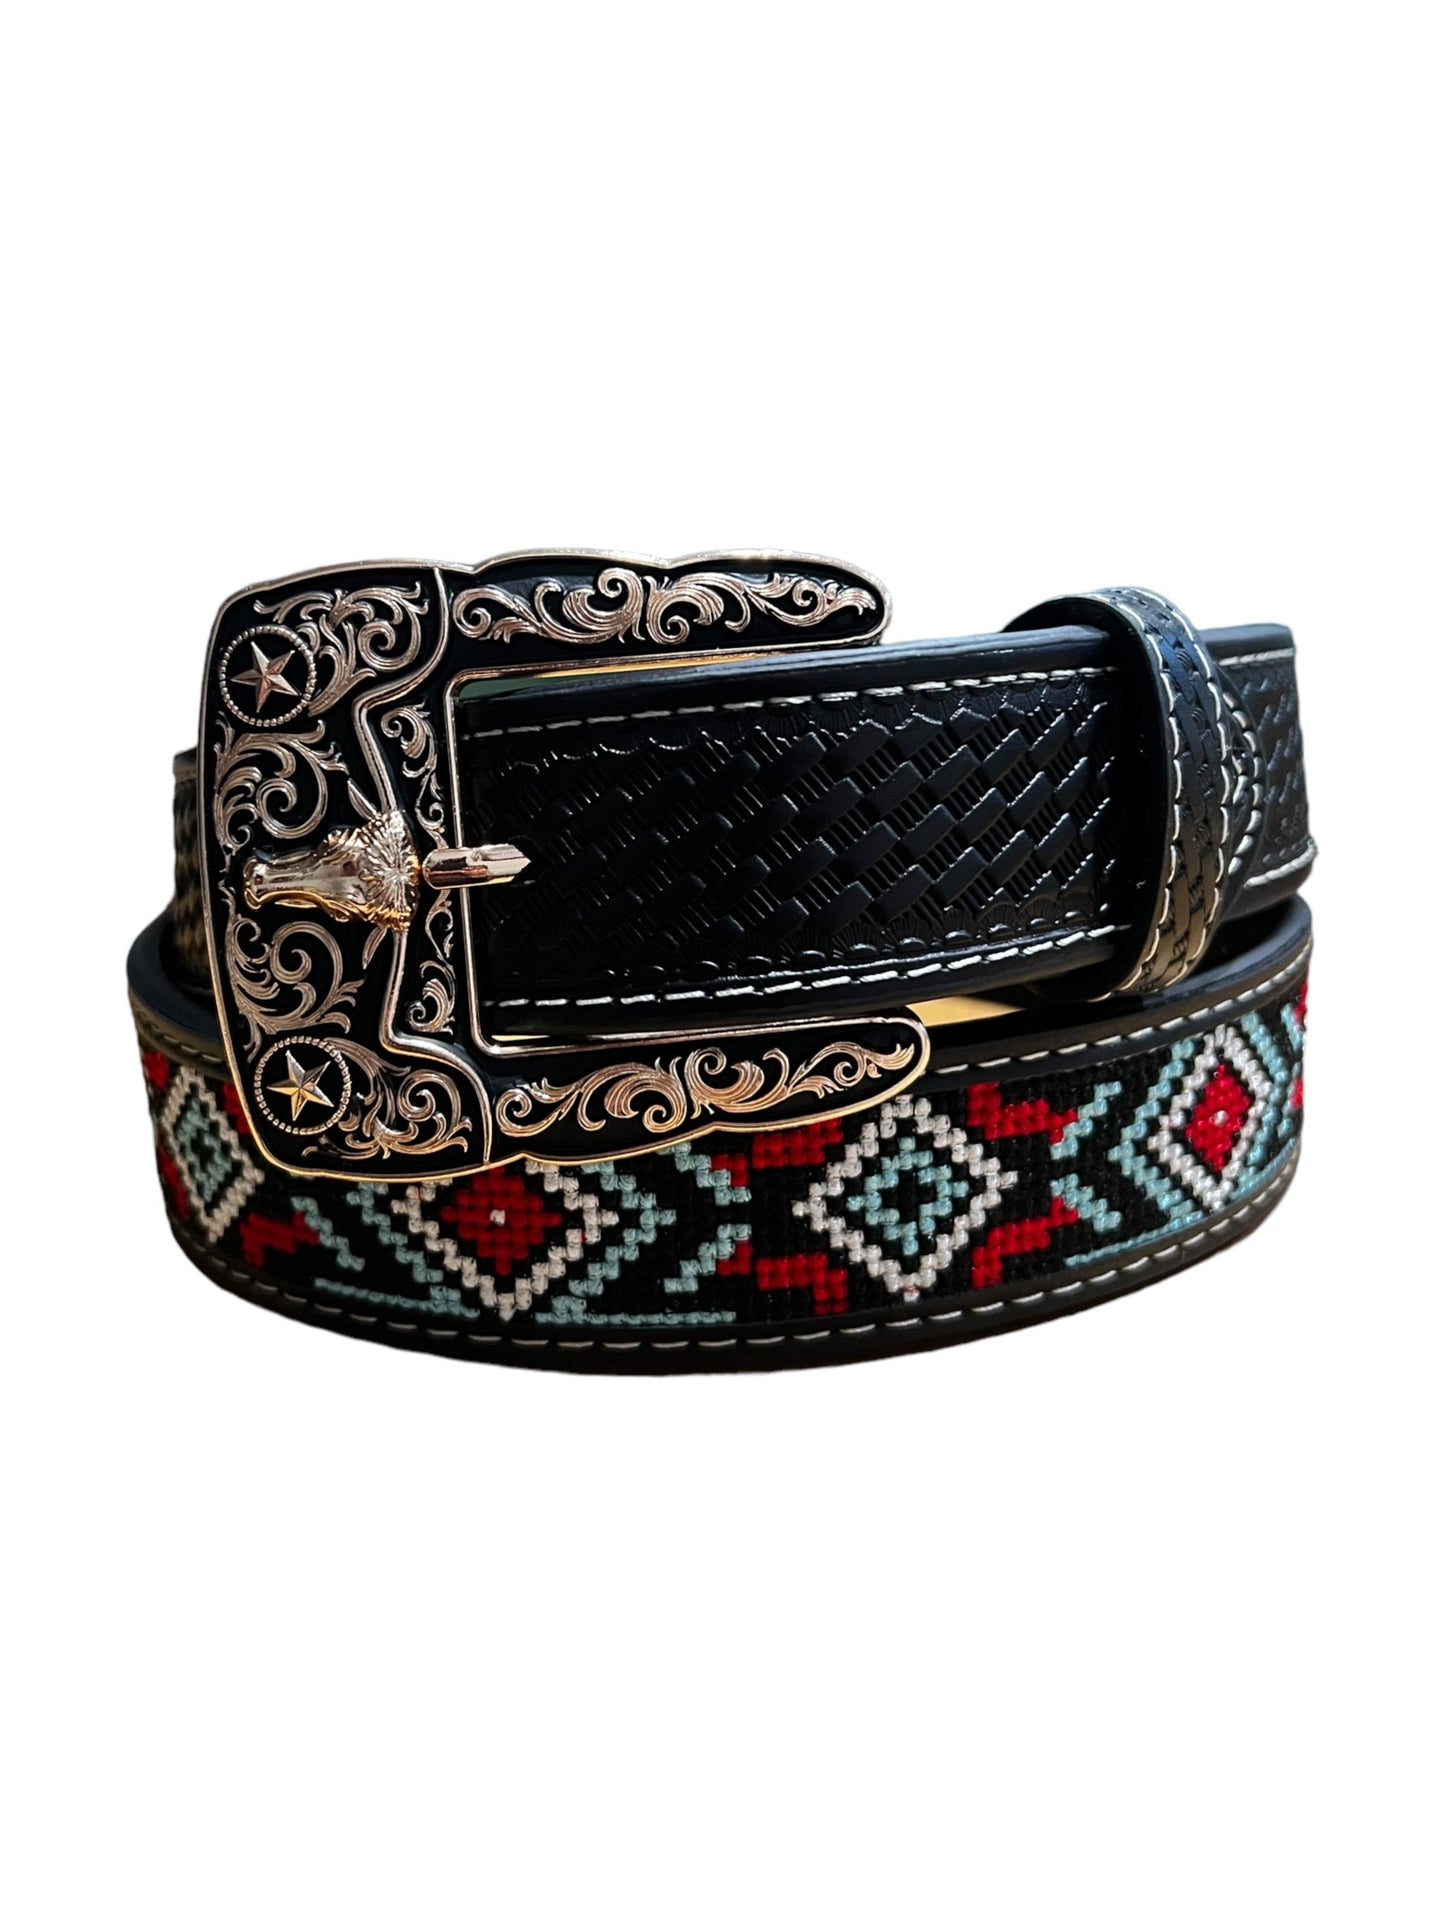 Cinto Bordado/Embroidered Belt